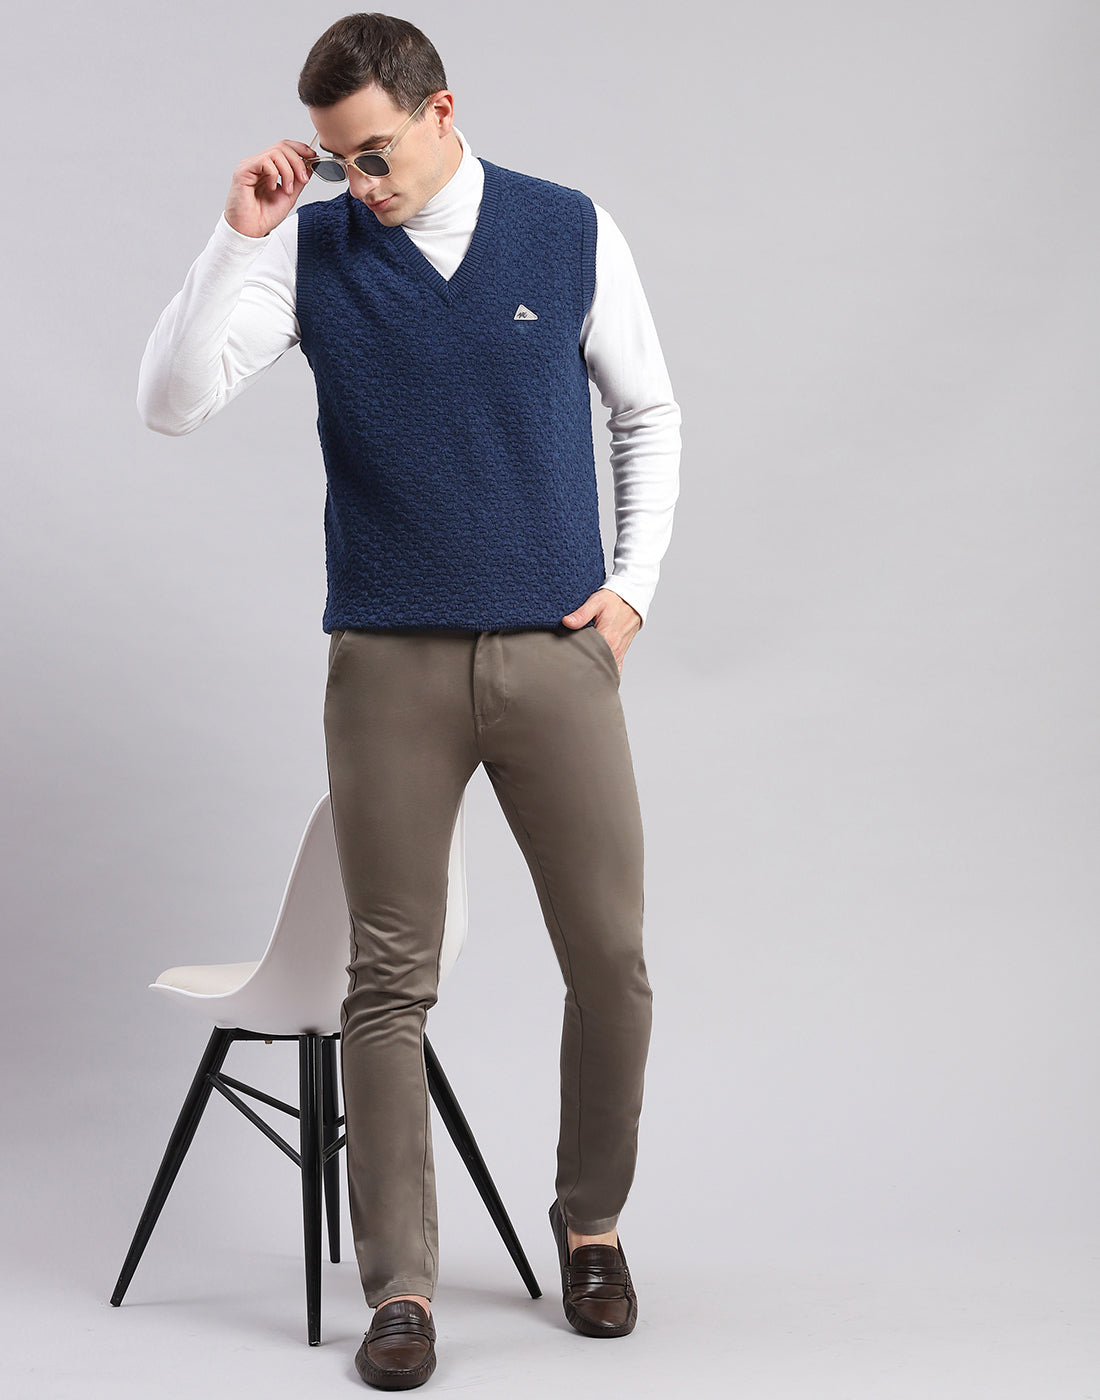 Men Blue Self Design V Neck Sleeveless Sweaters/Pullovers